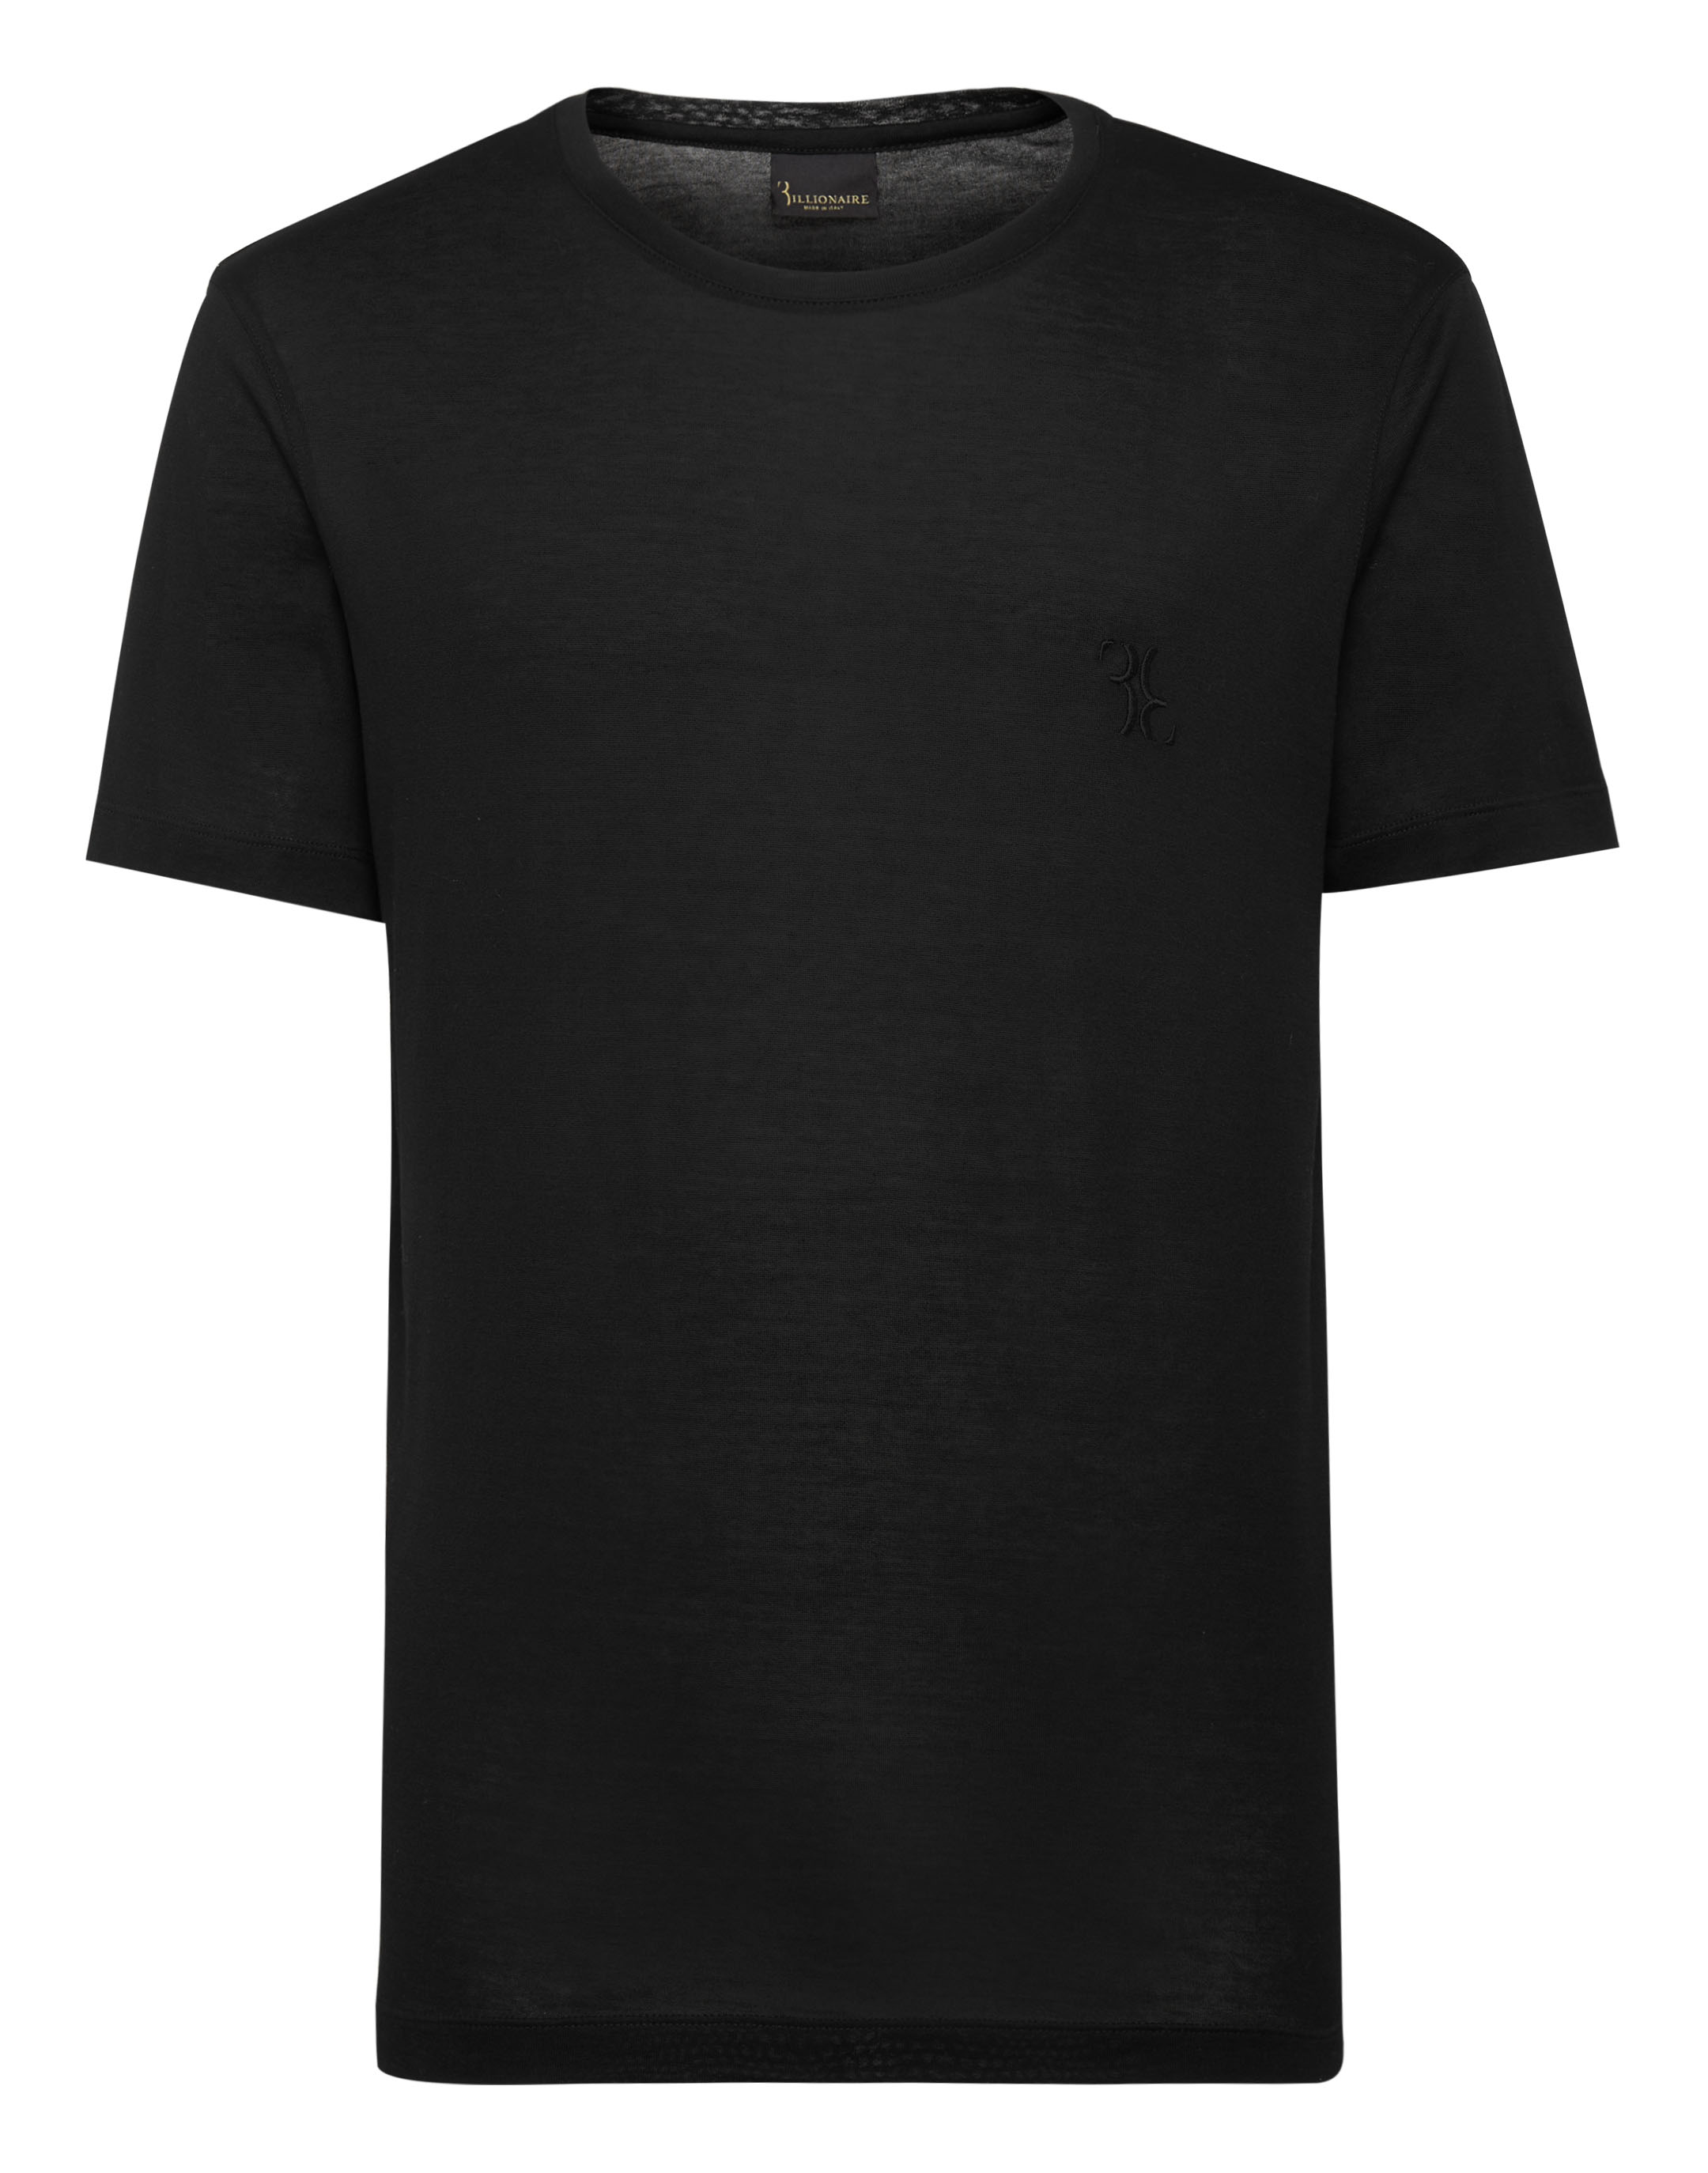 Louis Vuitton Classic T-Shirt